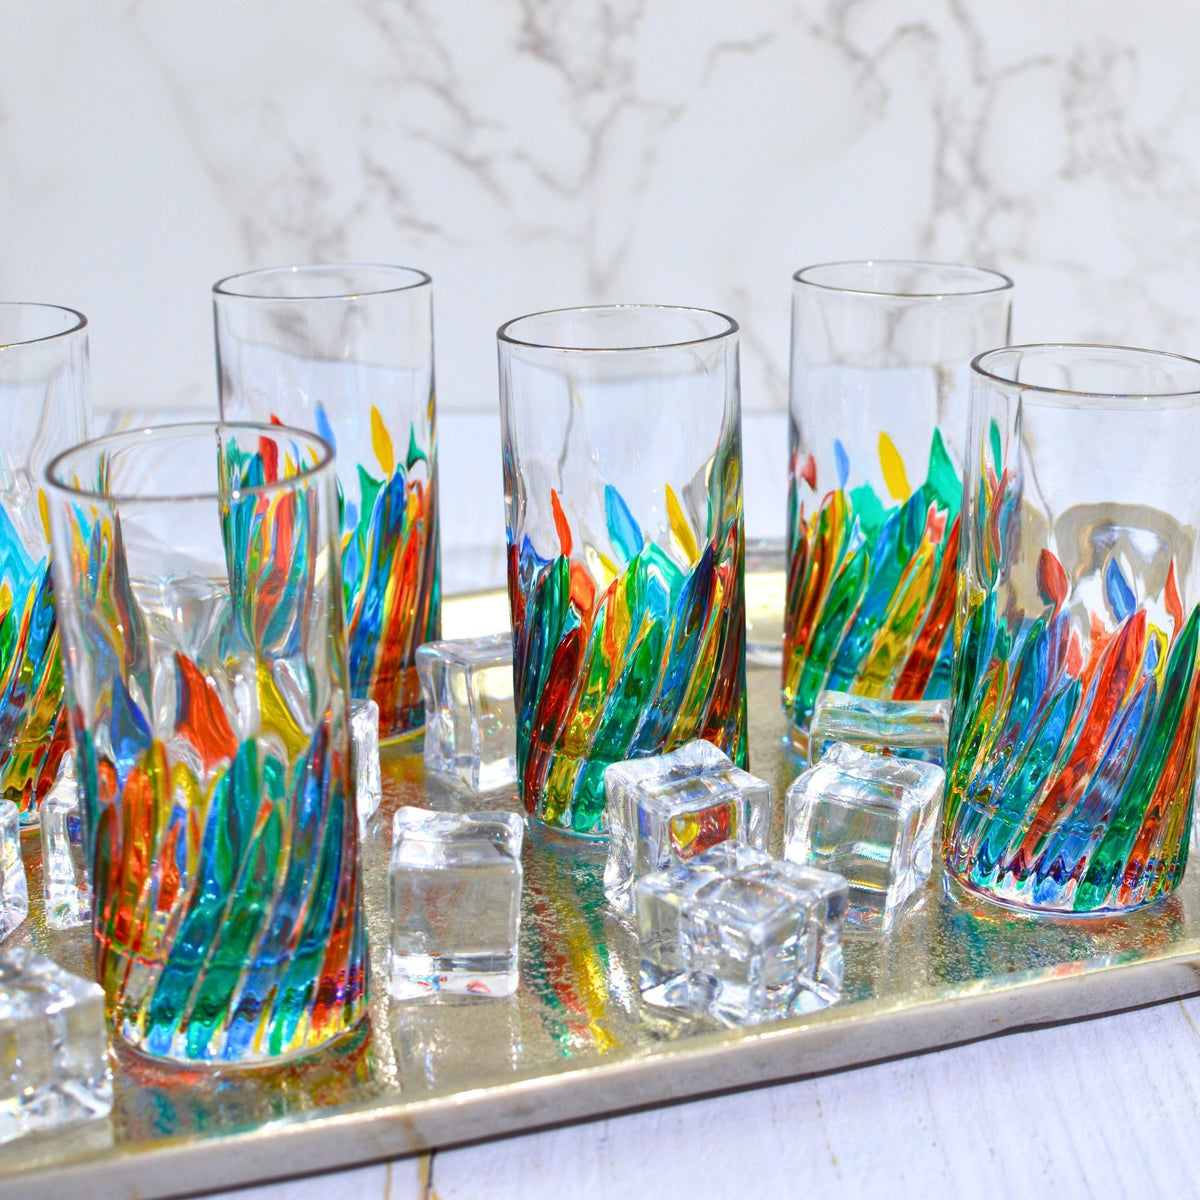 Enchanted Tall Shot Glass, Hand-Painted Italian Crystal - My Italian Decor